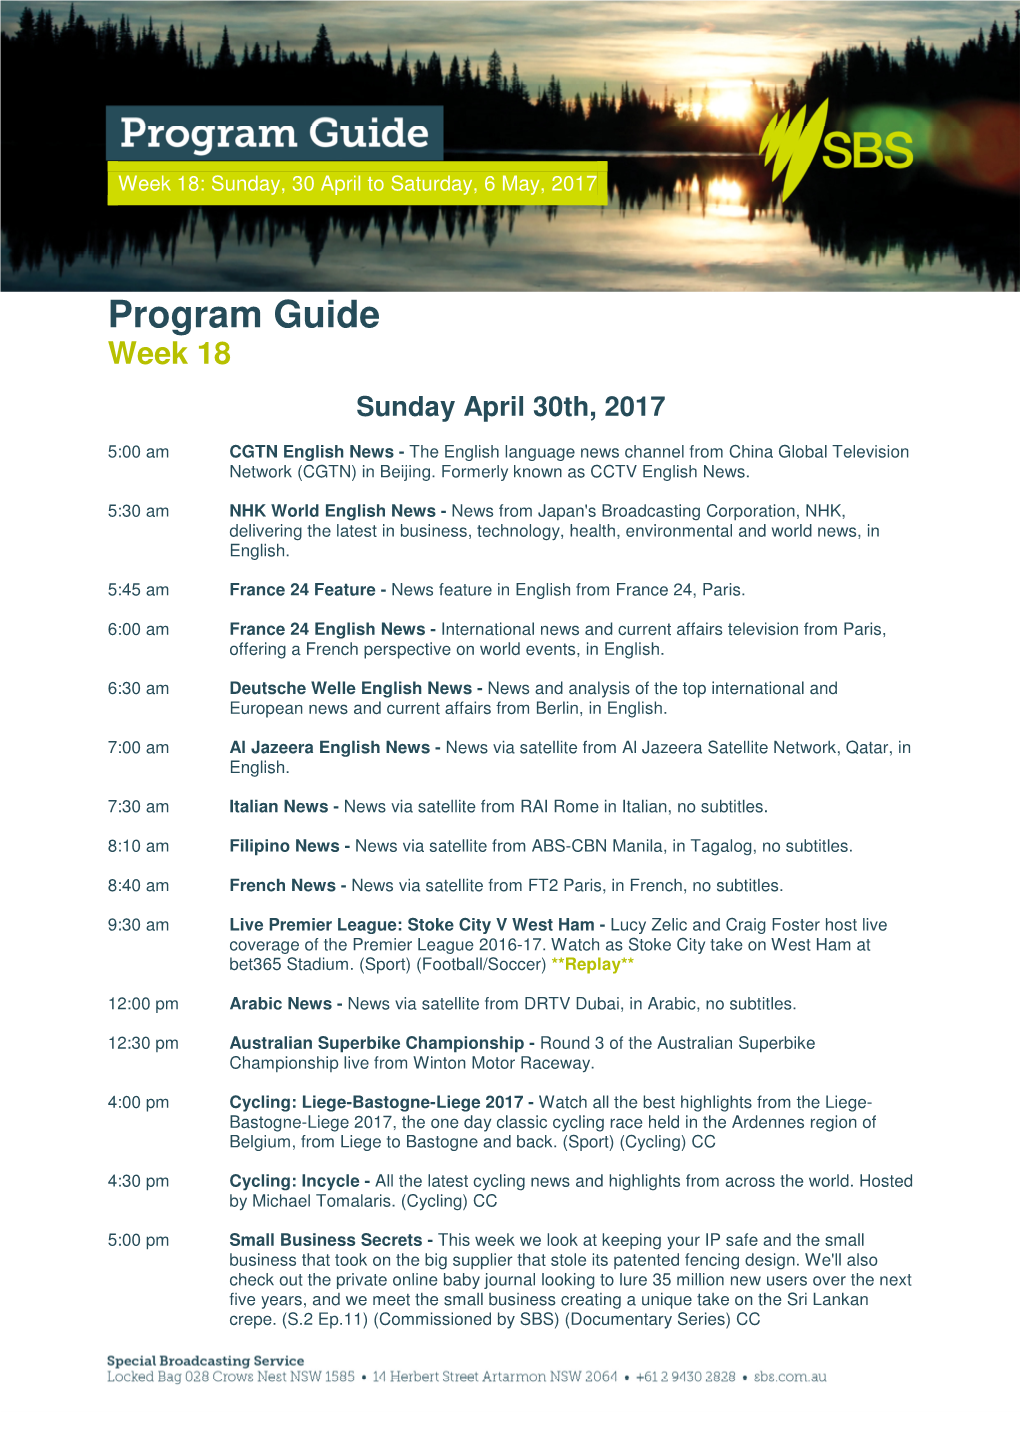 Program Guide Week 18